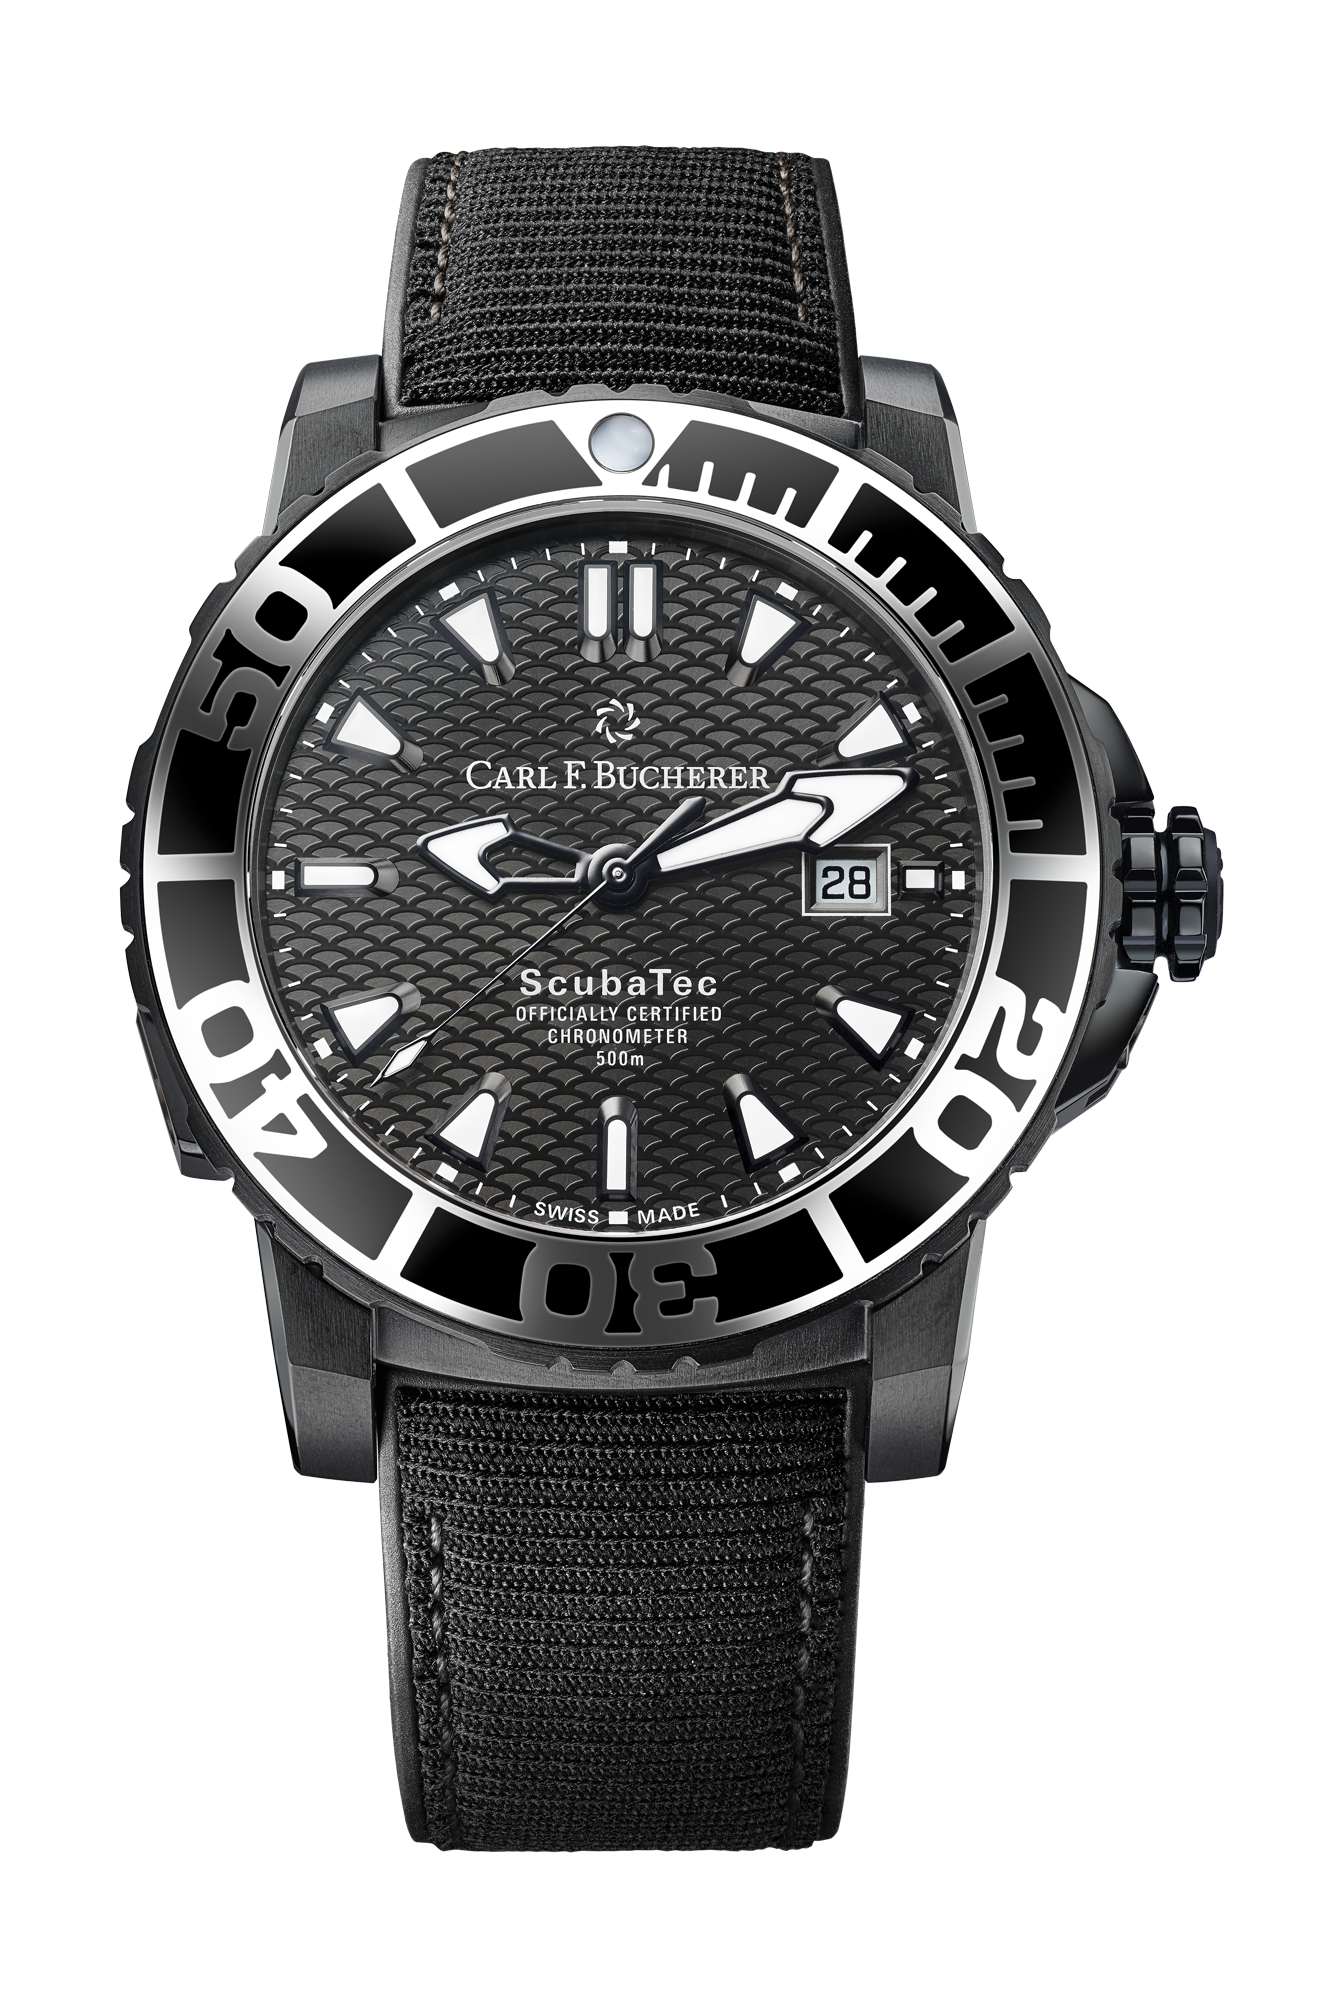 Carl F. Bucherer Patravi Scubatec Black Stainless Steel Men's Watch